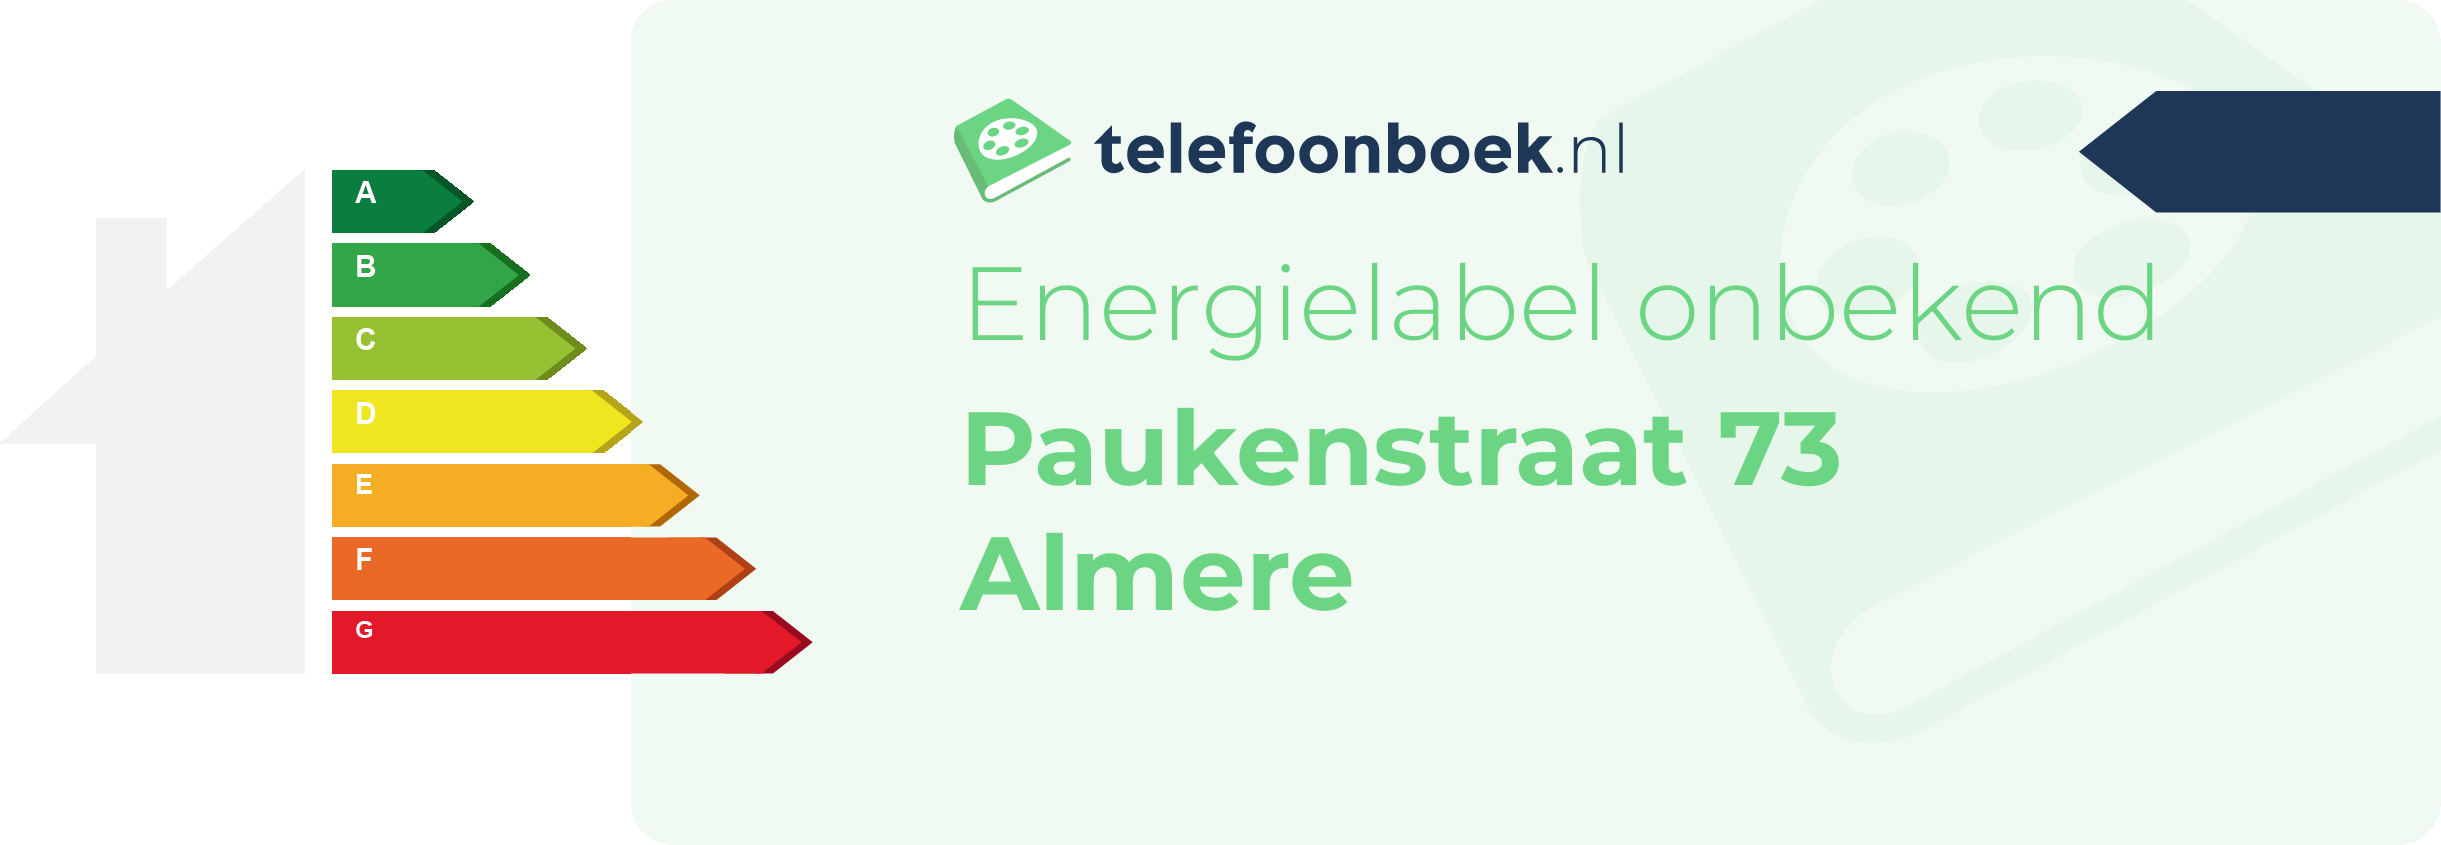 Energielabel Paukenstraat 73 Almere